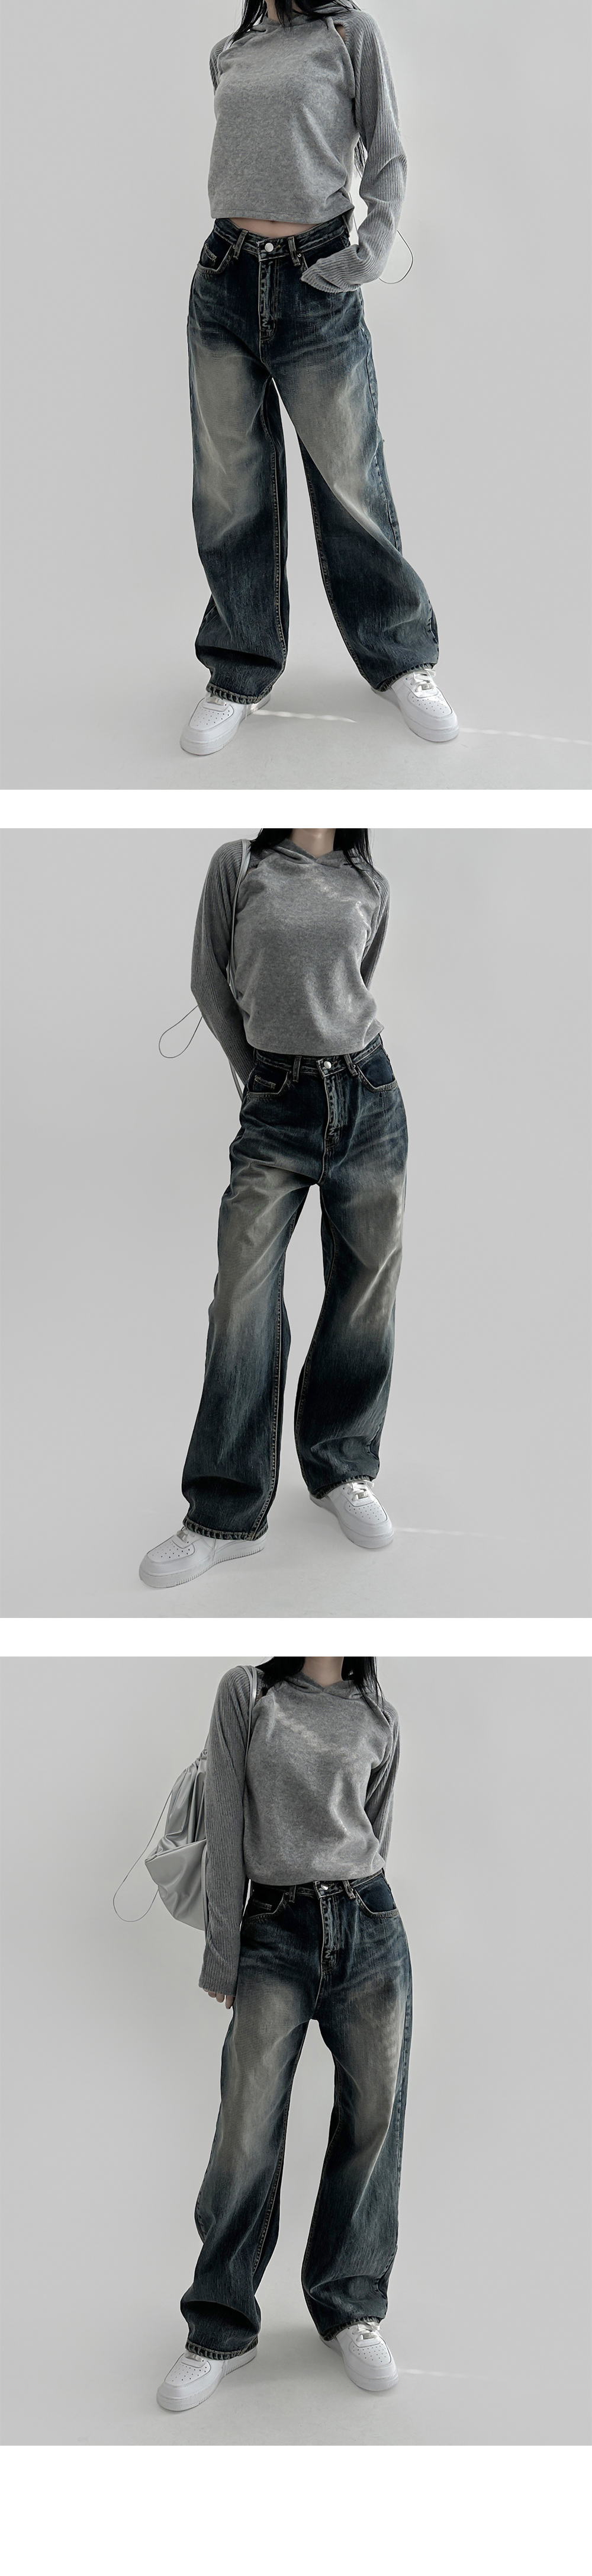 suspenders skirt/pants model image-S1L5